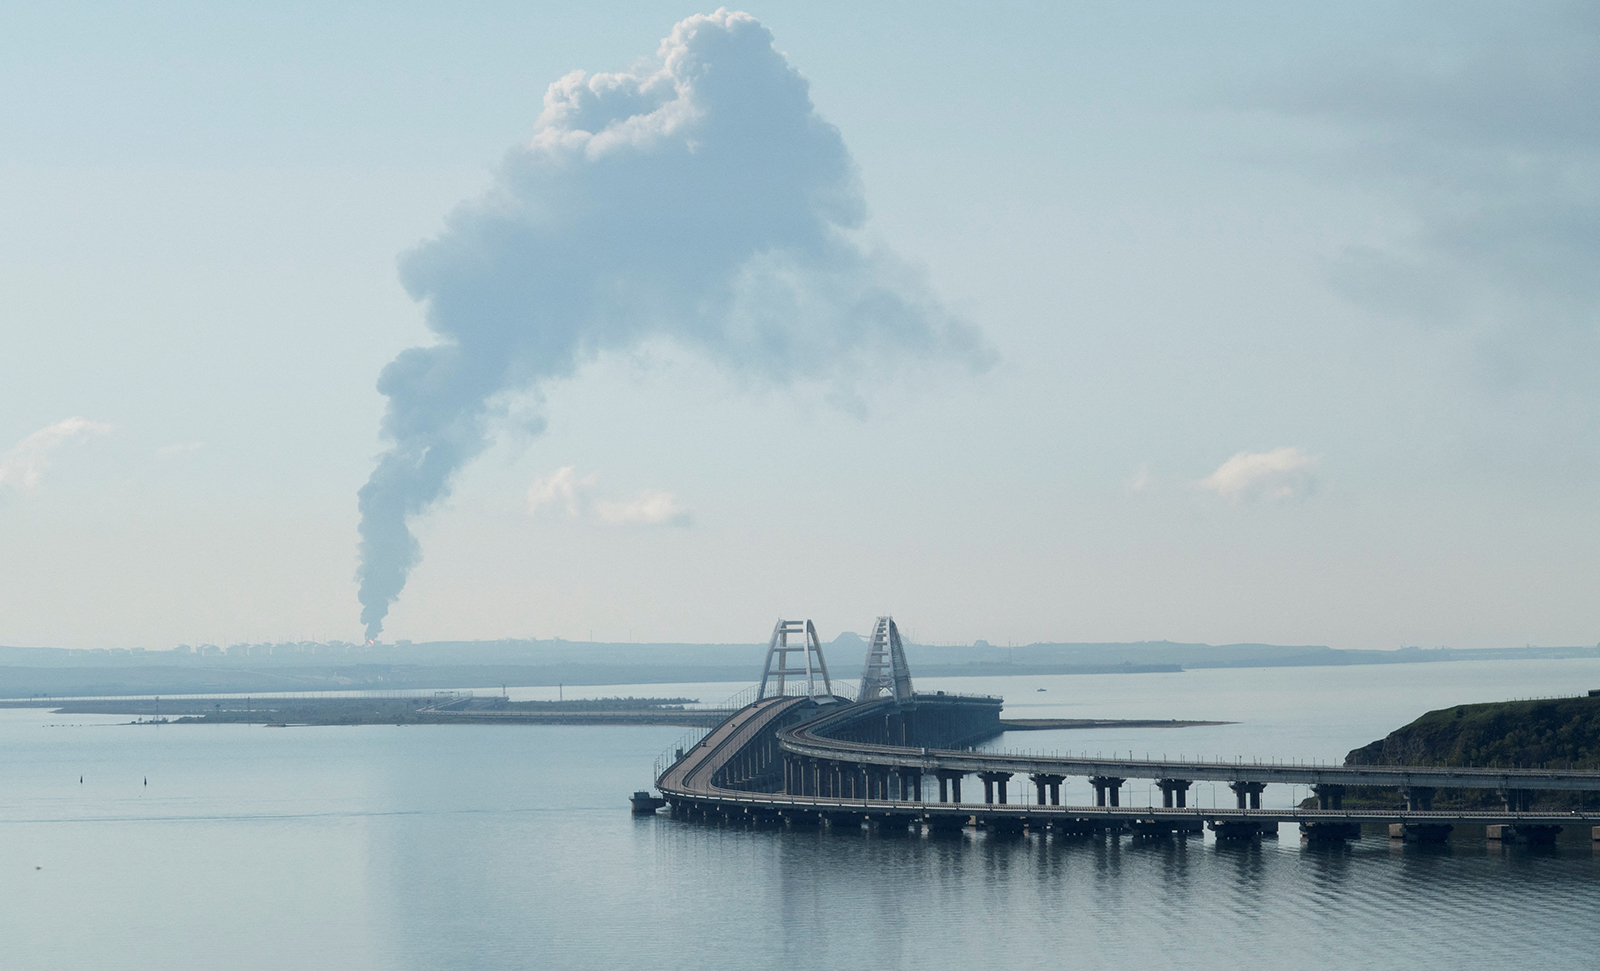 A view across the Kerch Strait shows smoke rising above a fuel depot near the Crimea bridge in Russia's Krasnodar region as seen from a coastline in Crimea, on May 3.